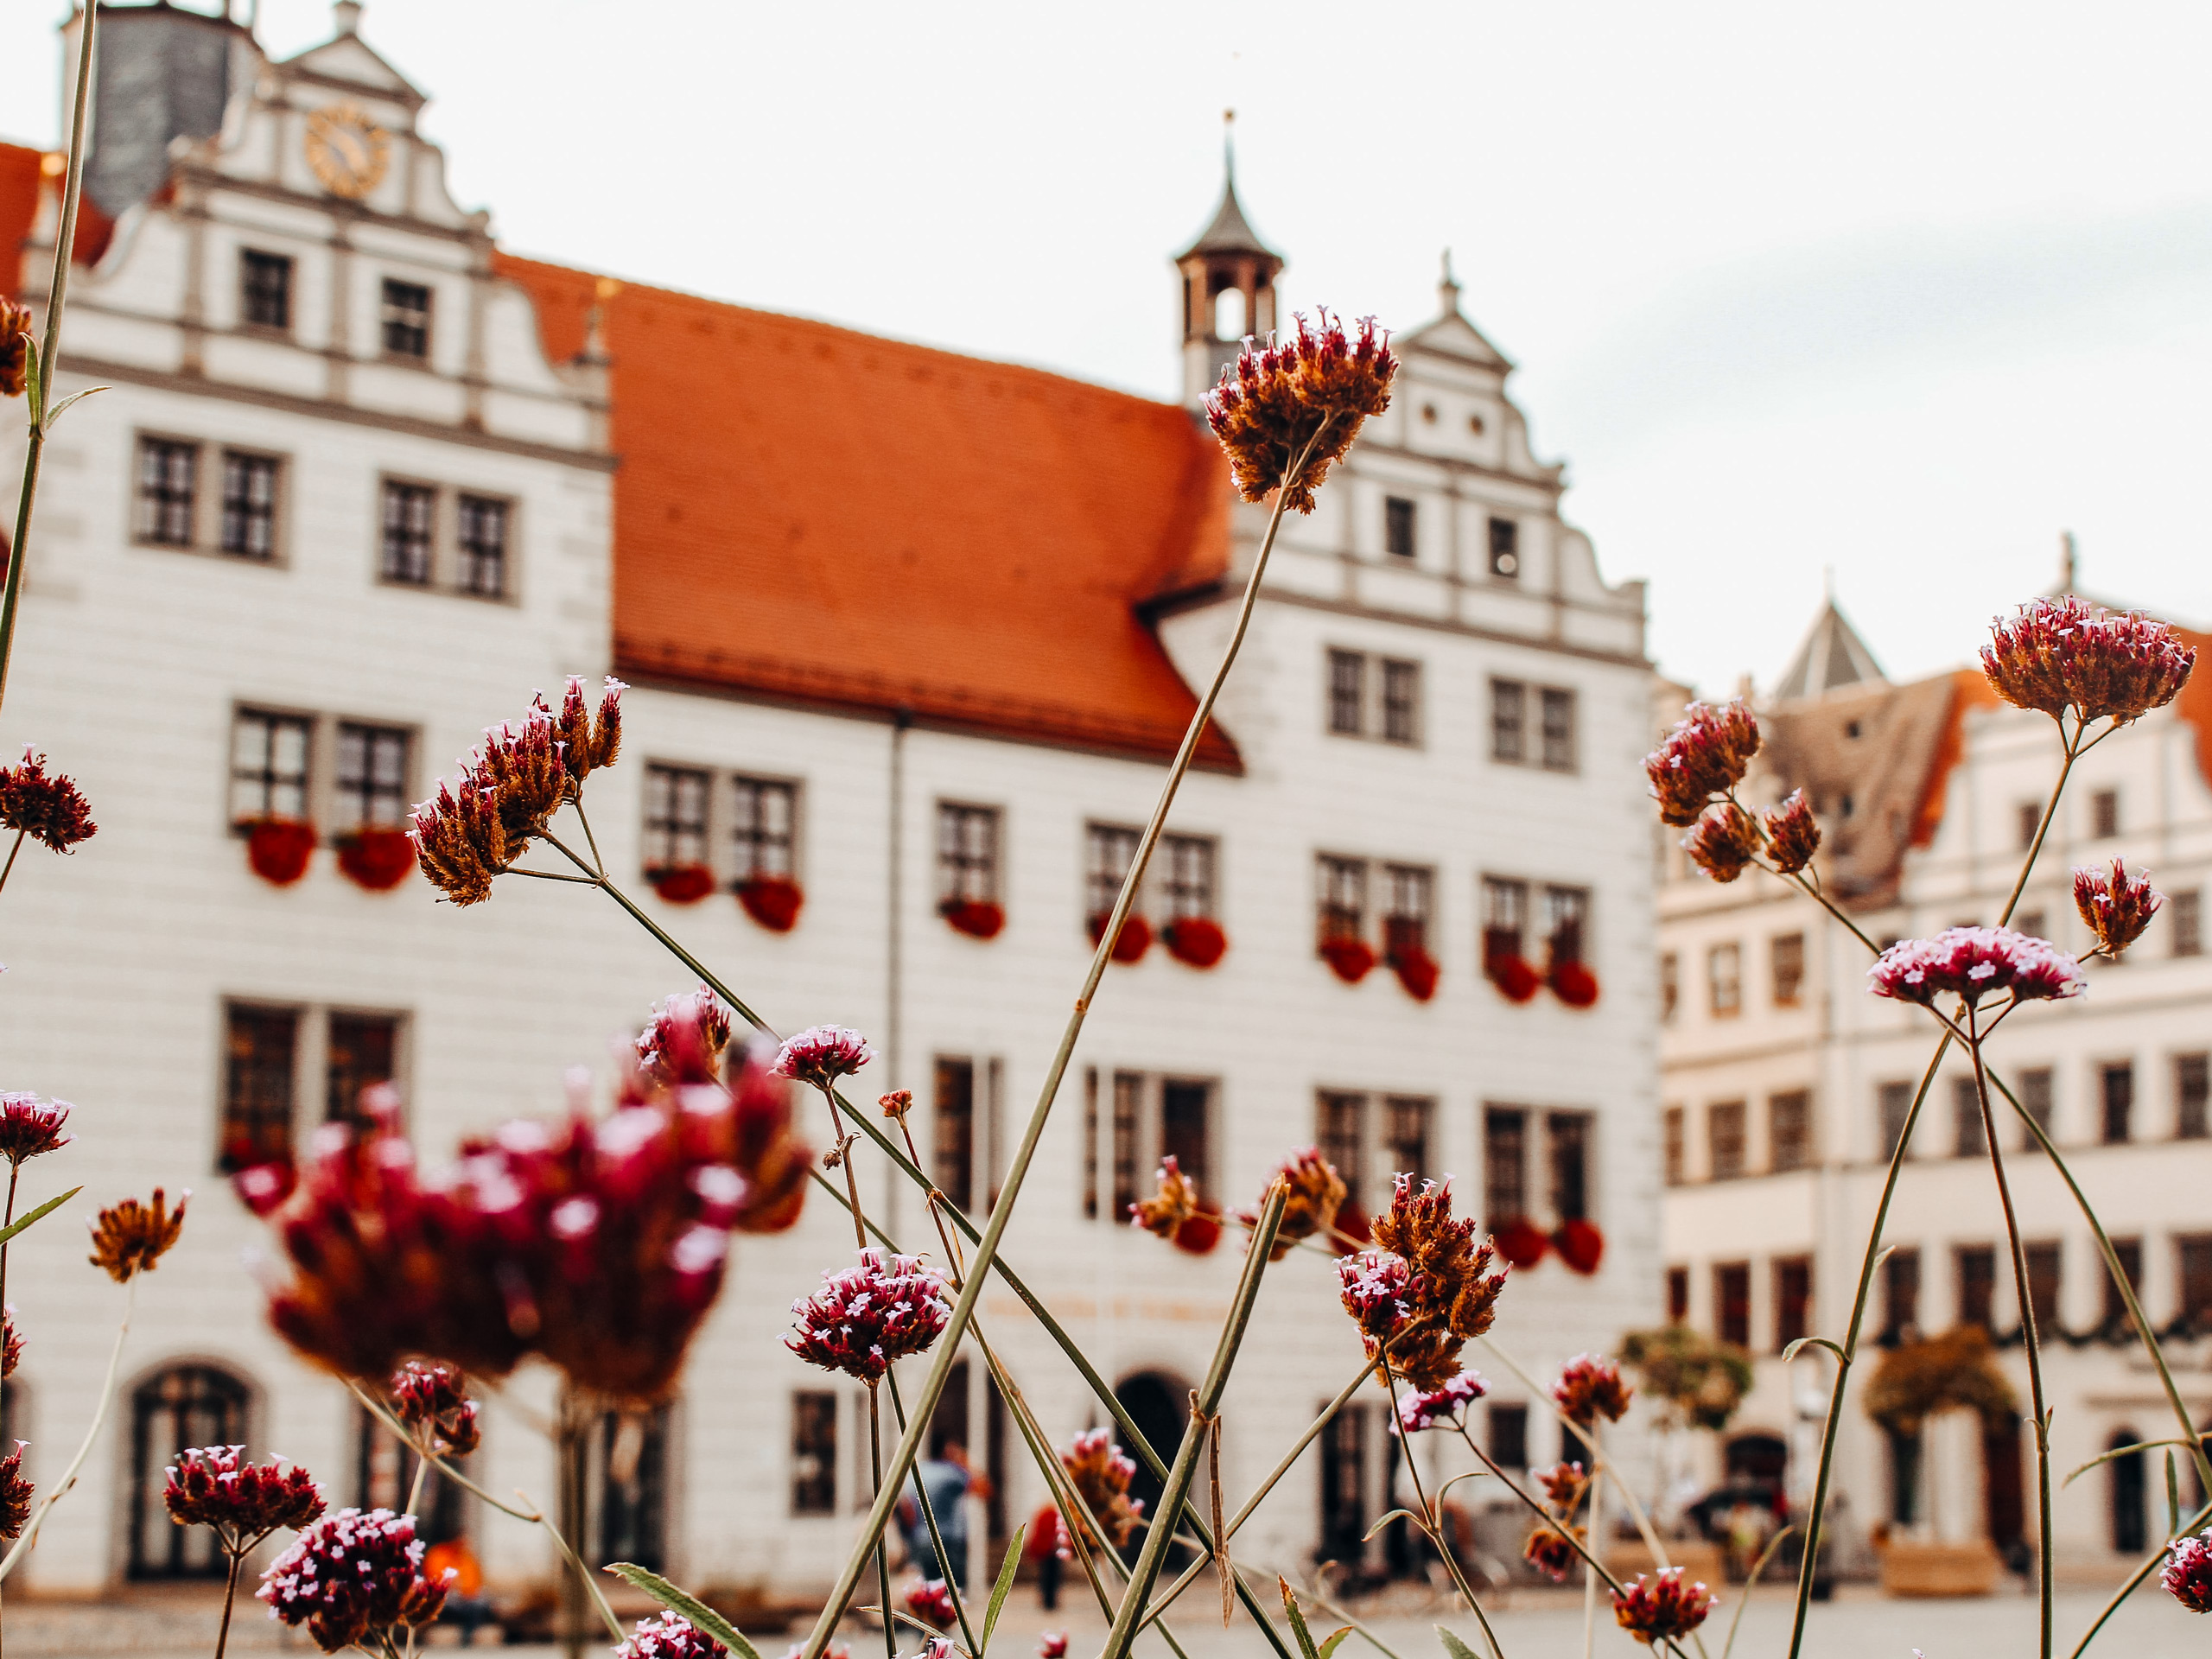 Renaissance town of Torgau